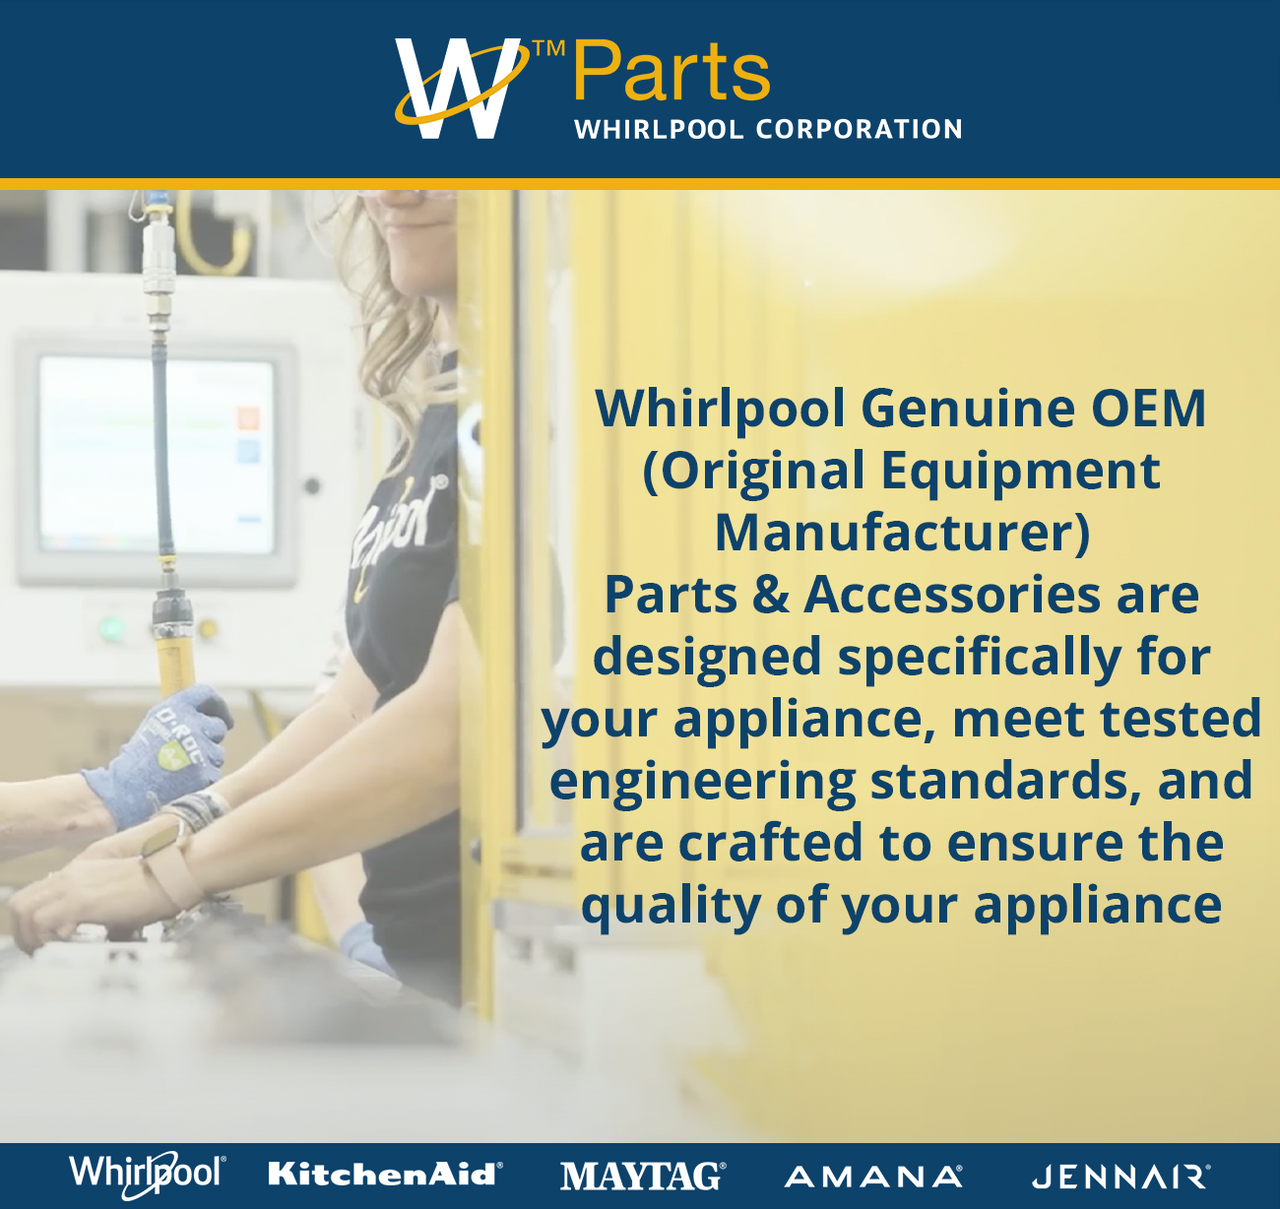 Whirlpool WPW10705575 - Dishwasher Turbidity Sensor - Whirlpool Genuine Part Badge